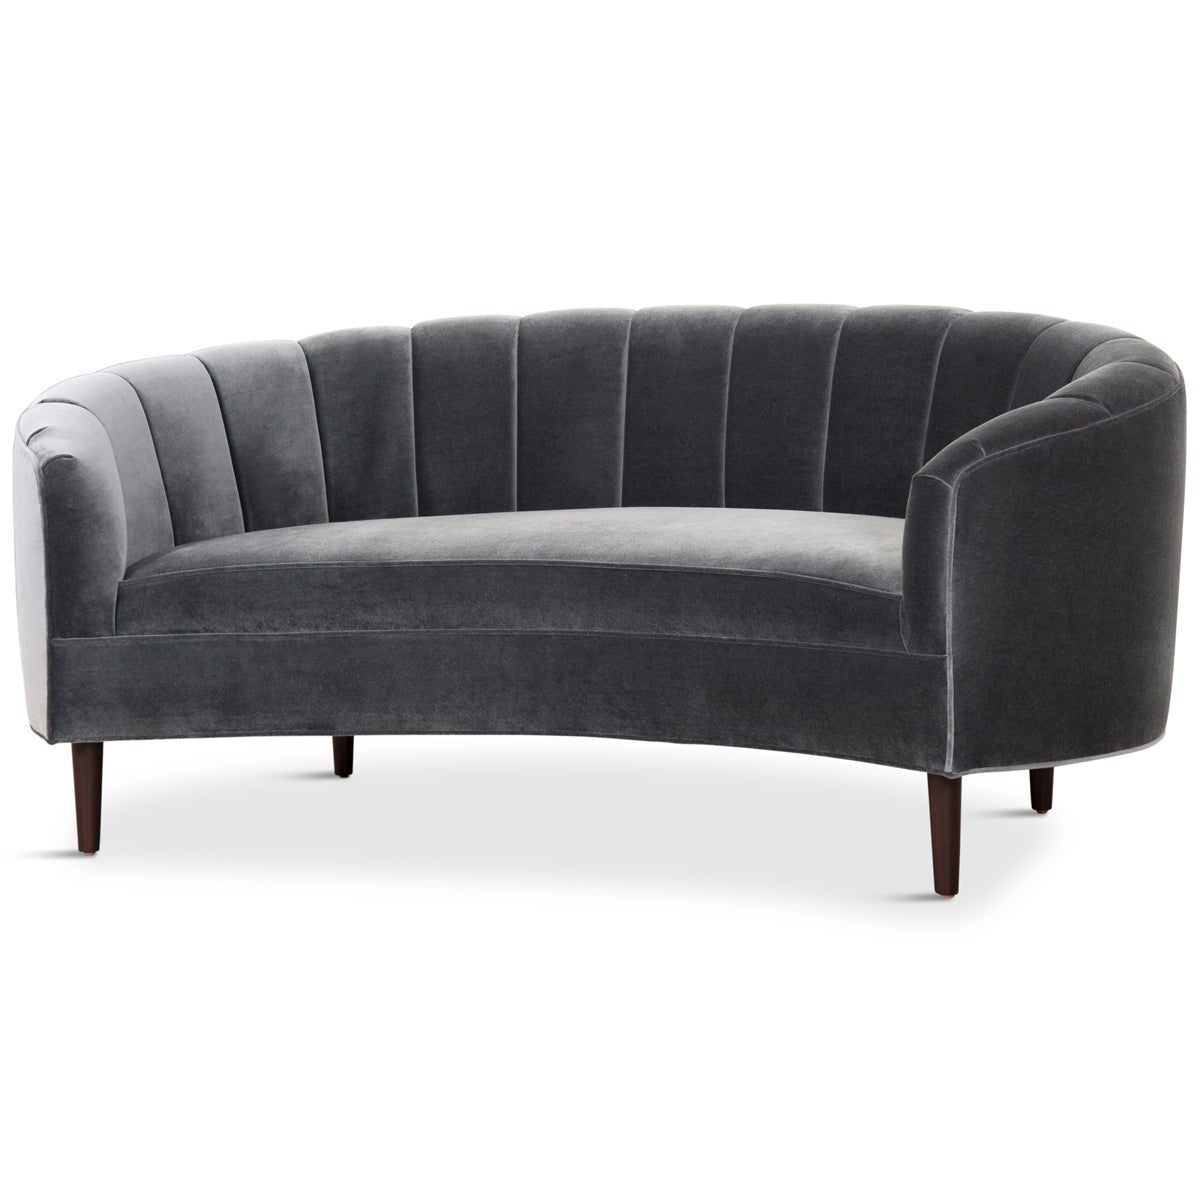 Art Deco Petite Sofa with Channel Tufting - ModShop1.com